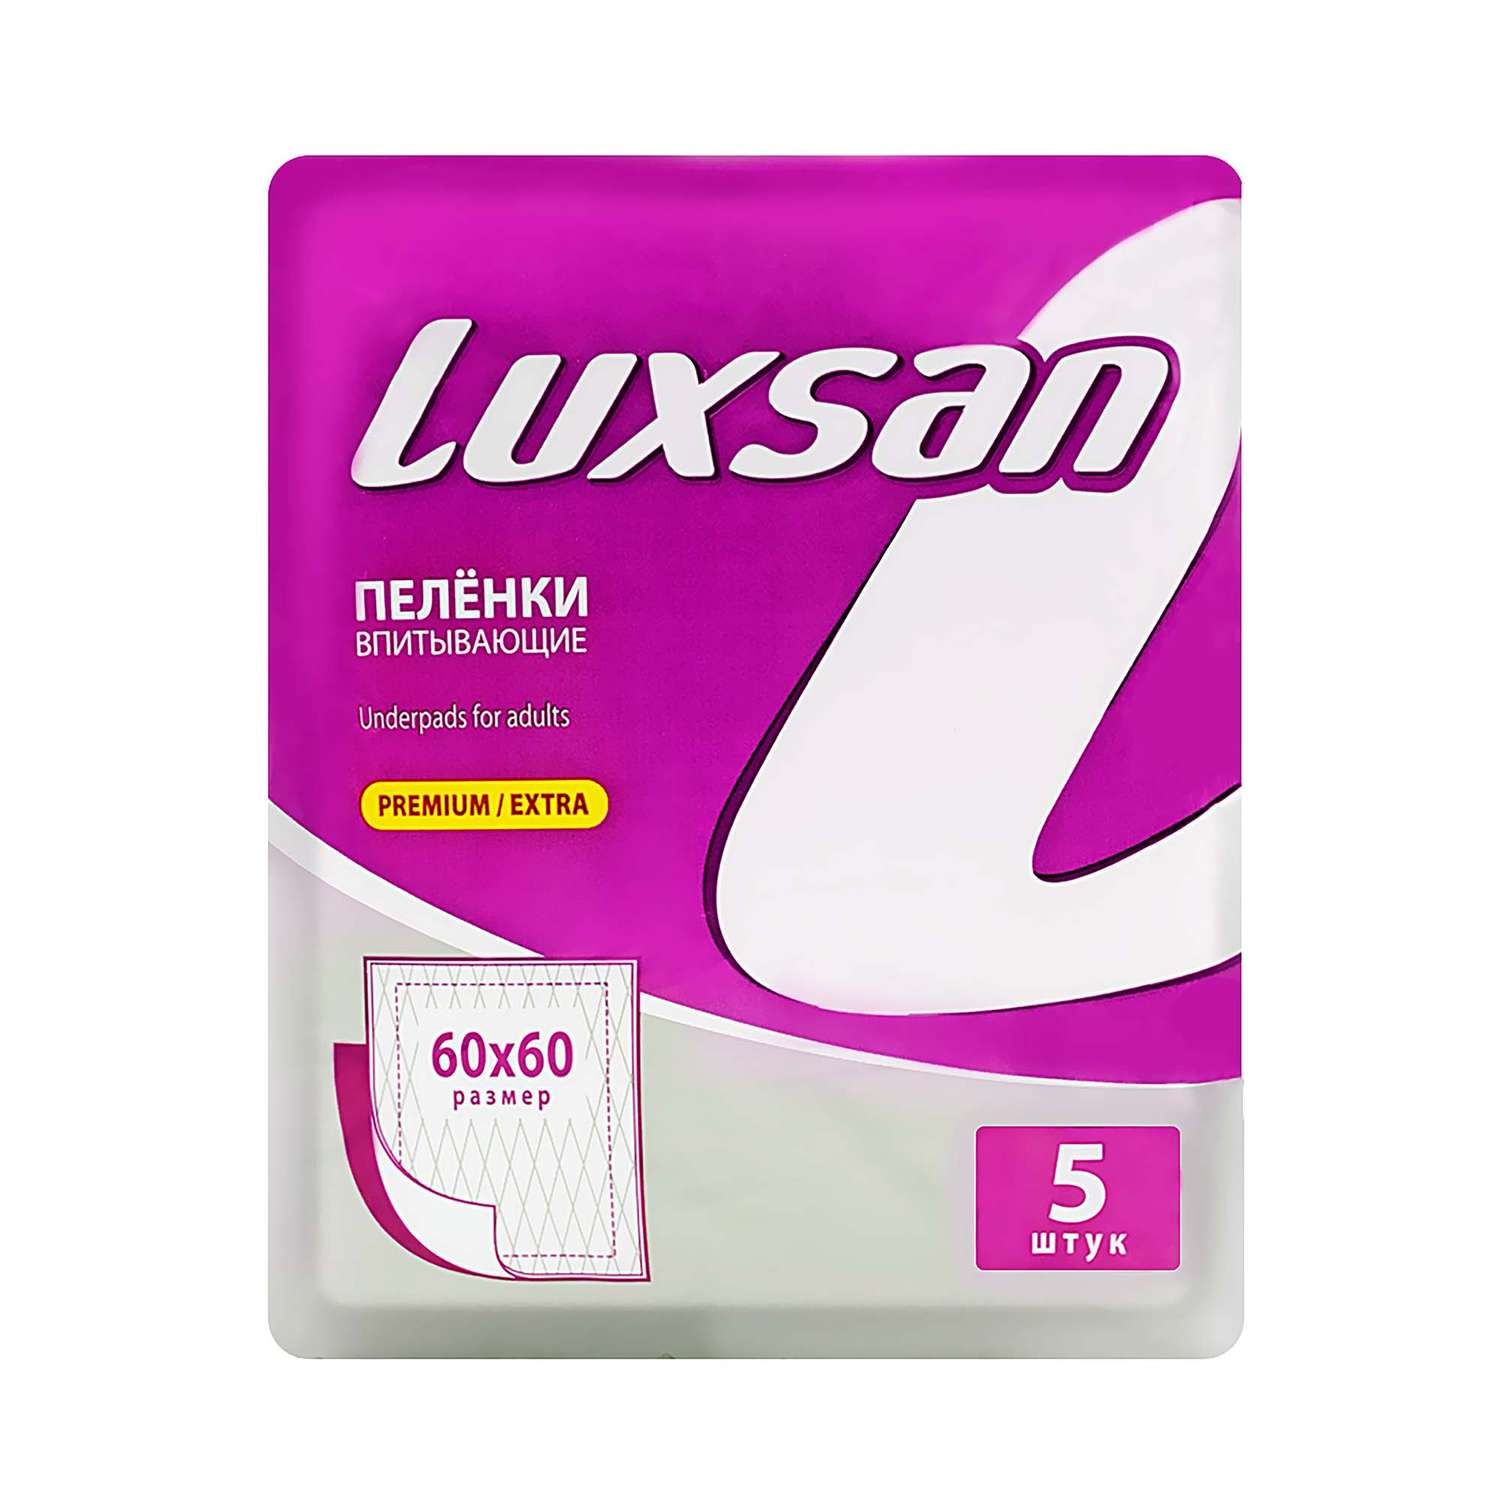 Пеленки впитывающие Luxsan Premium/Extra 60х60 5 шт - фото 1